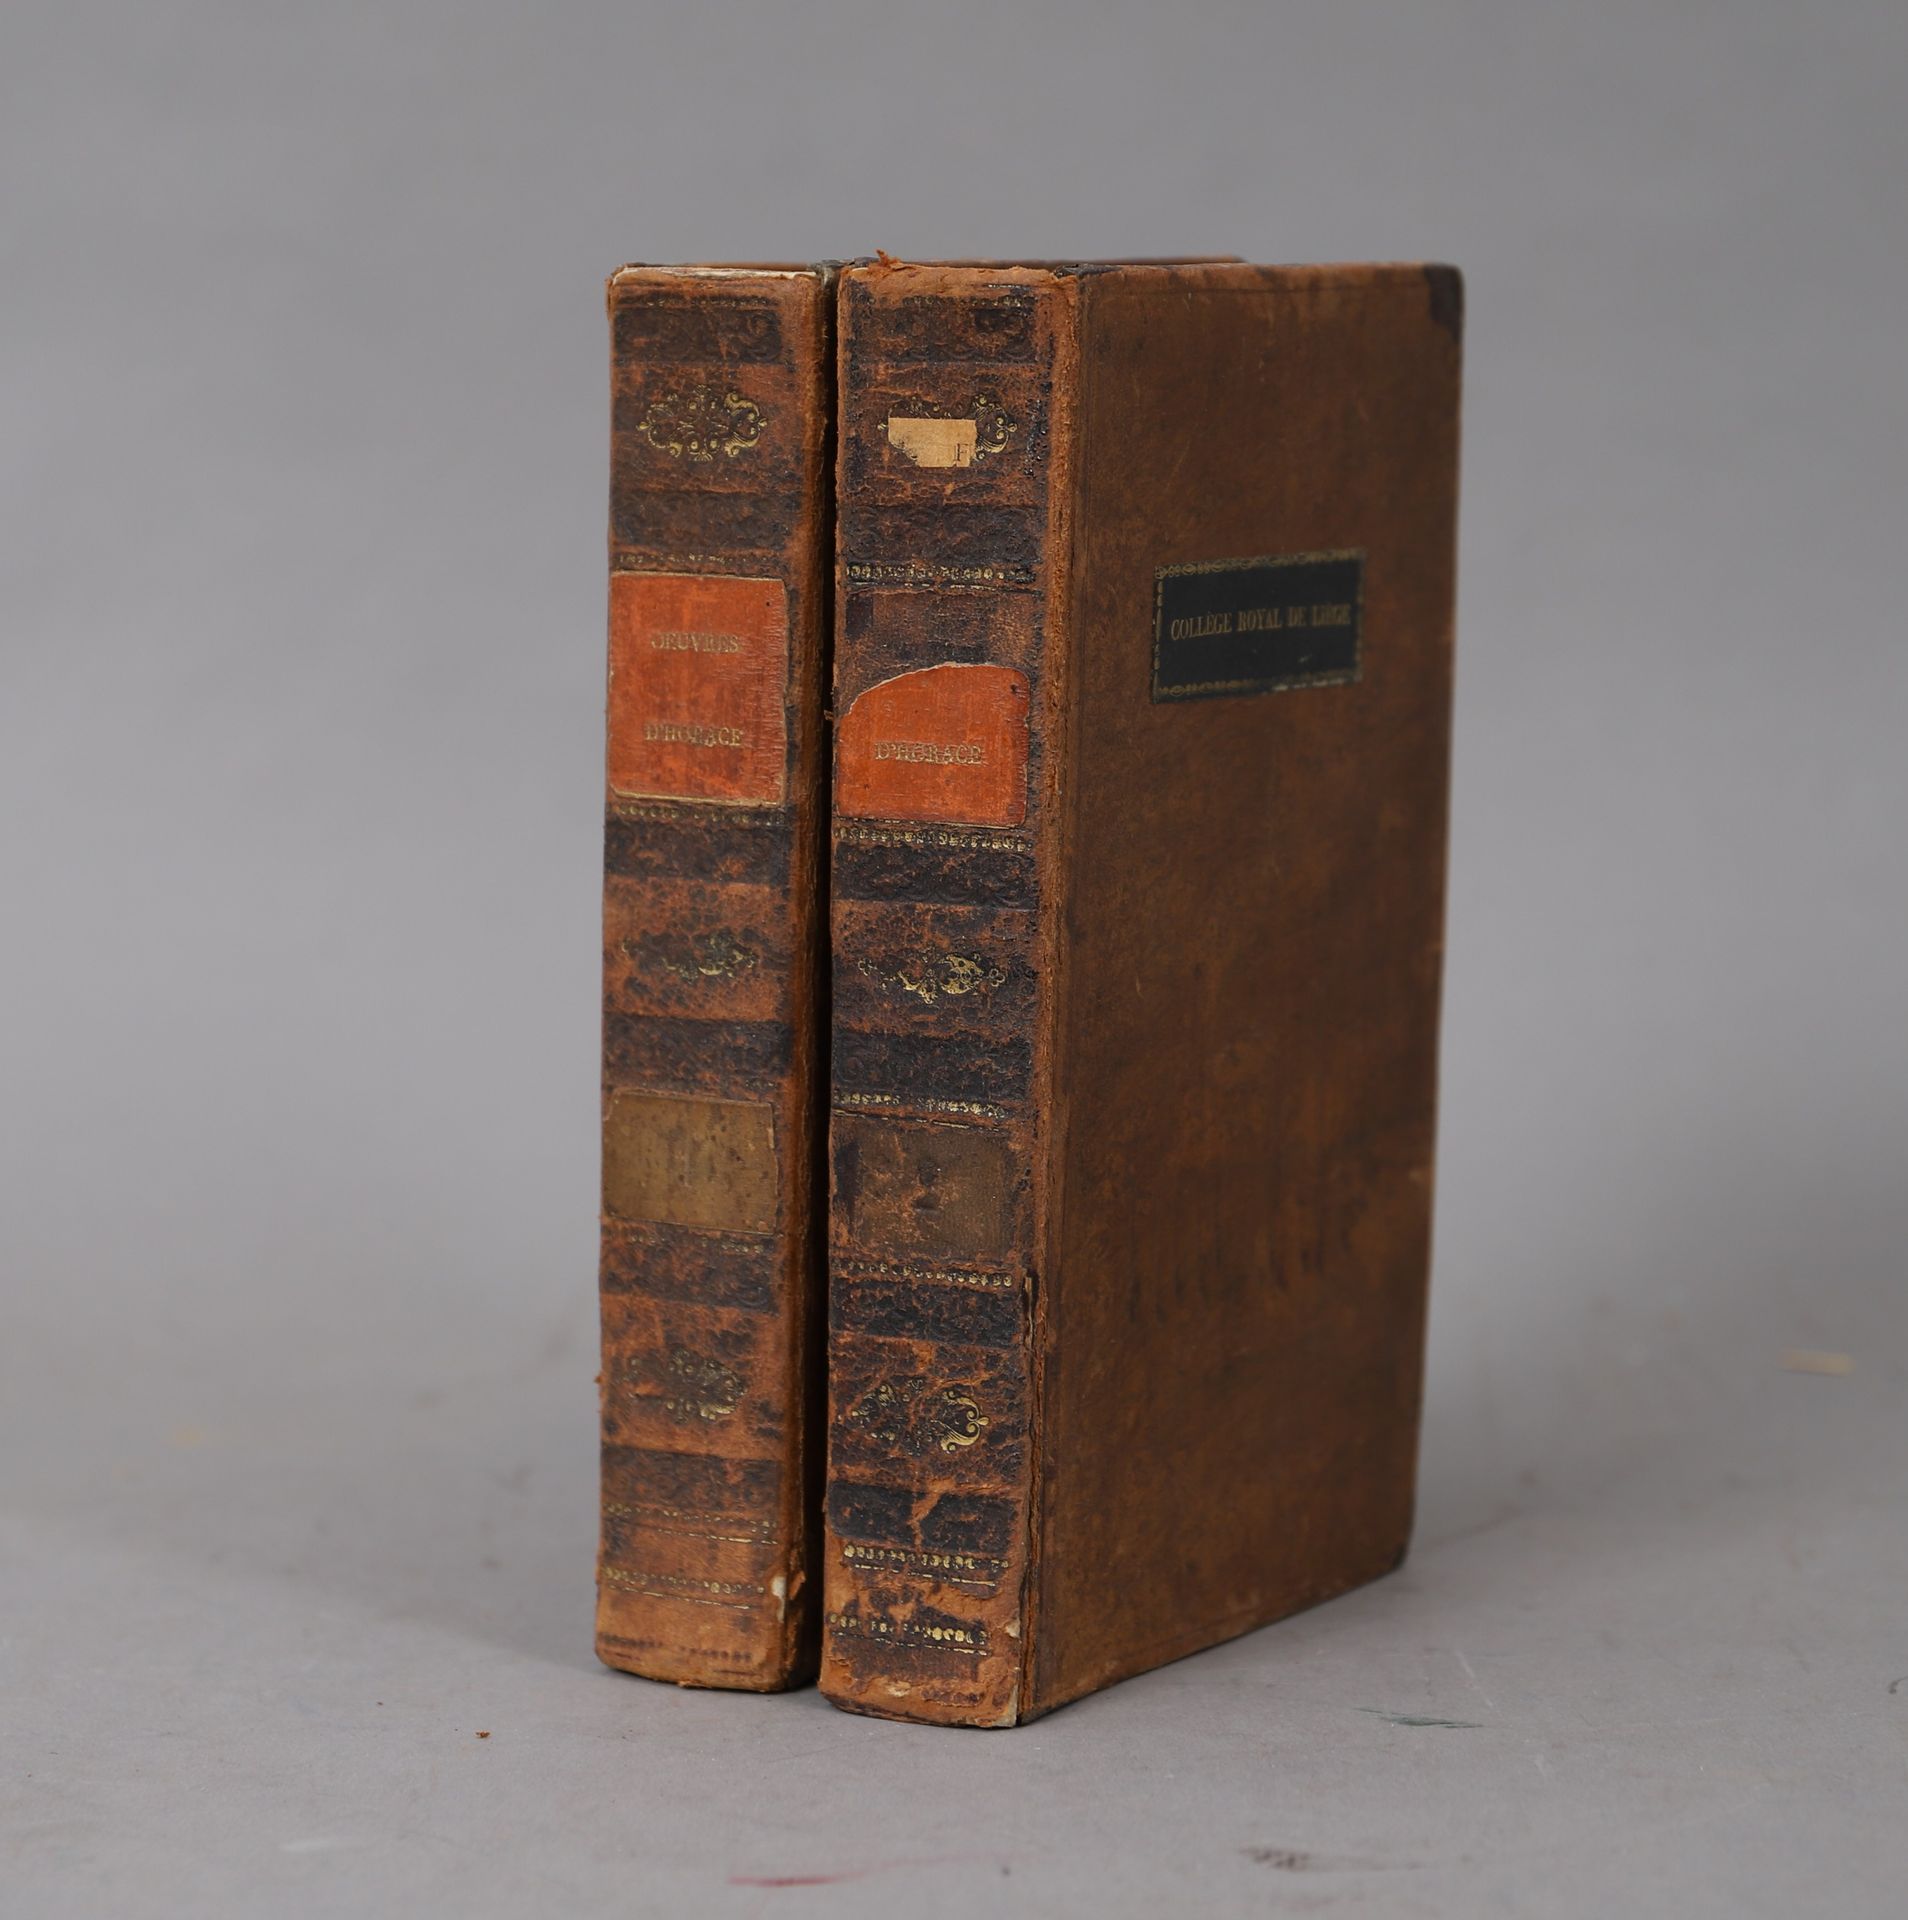 Null obras de horace

1823

2 volúmenes encuadernados.